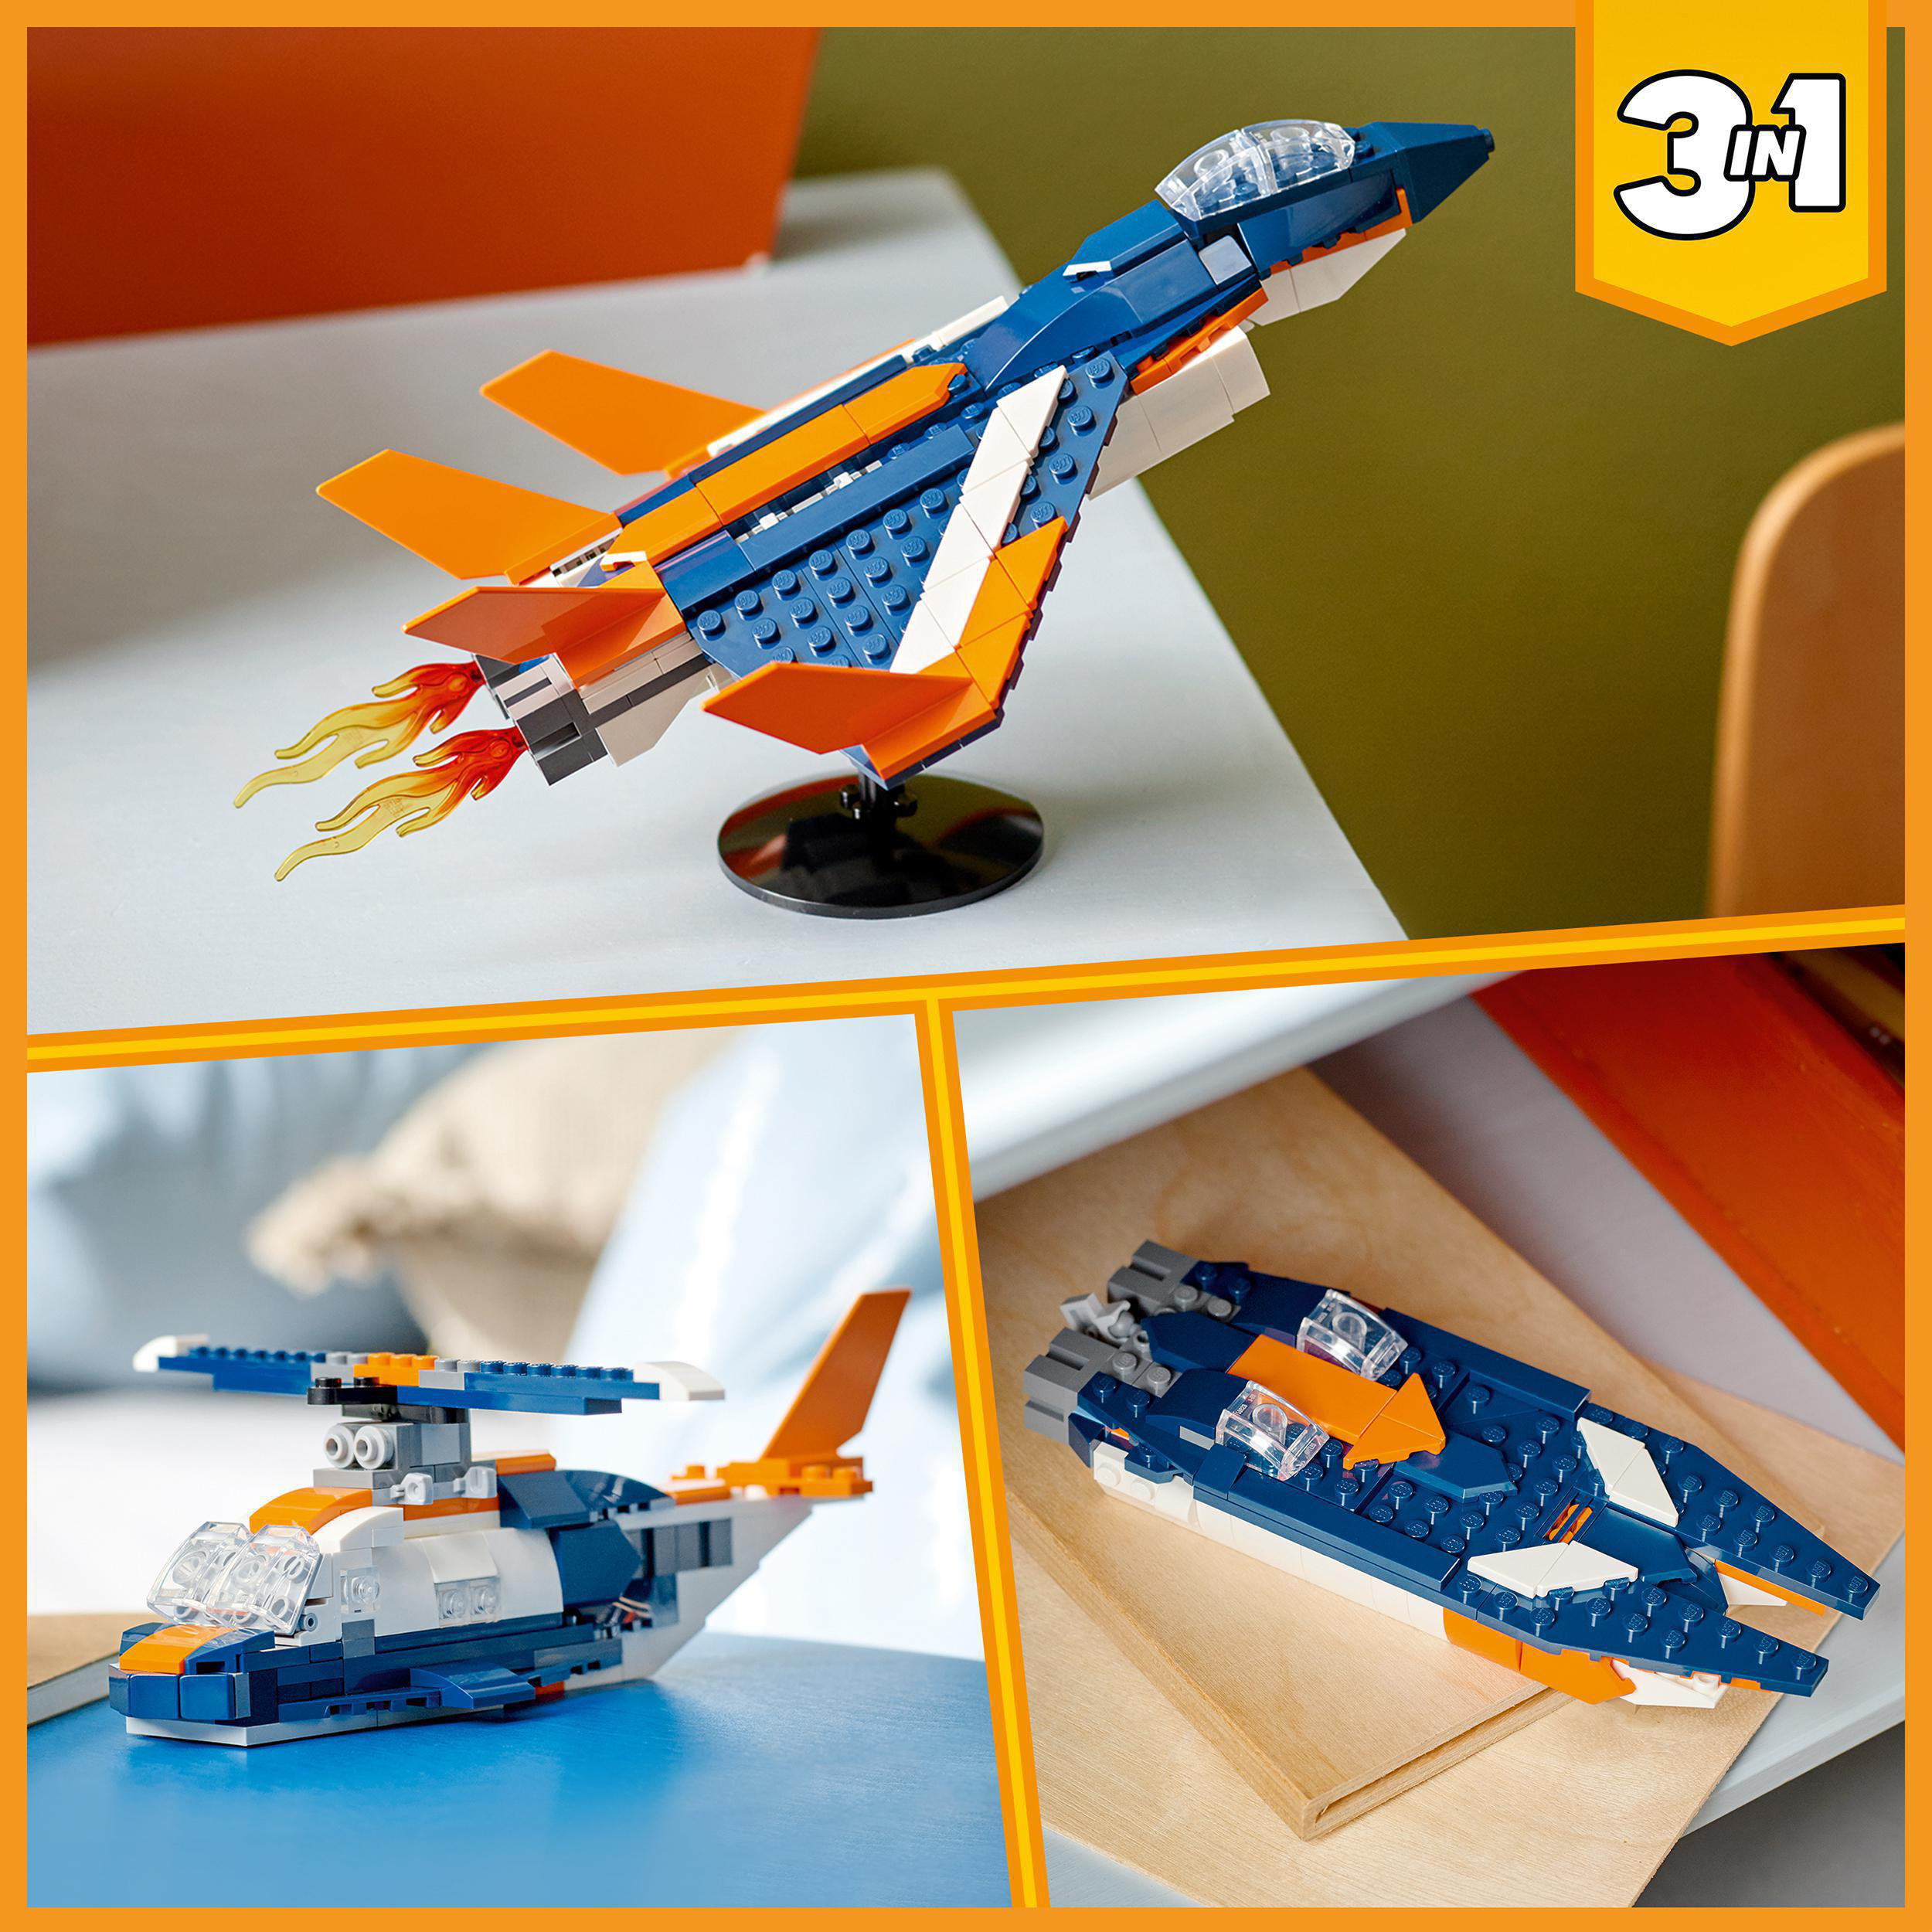 LEGO Creator 31126 Bausatz, Überschalljet Mehrfarbig